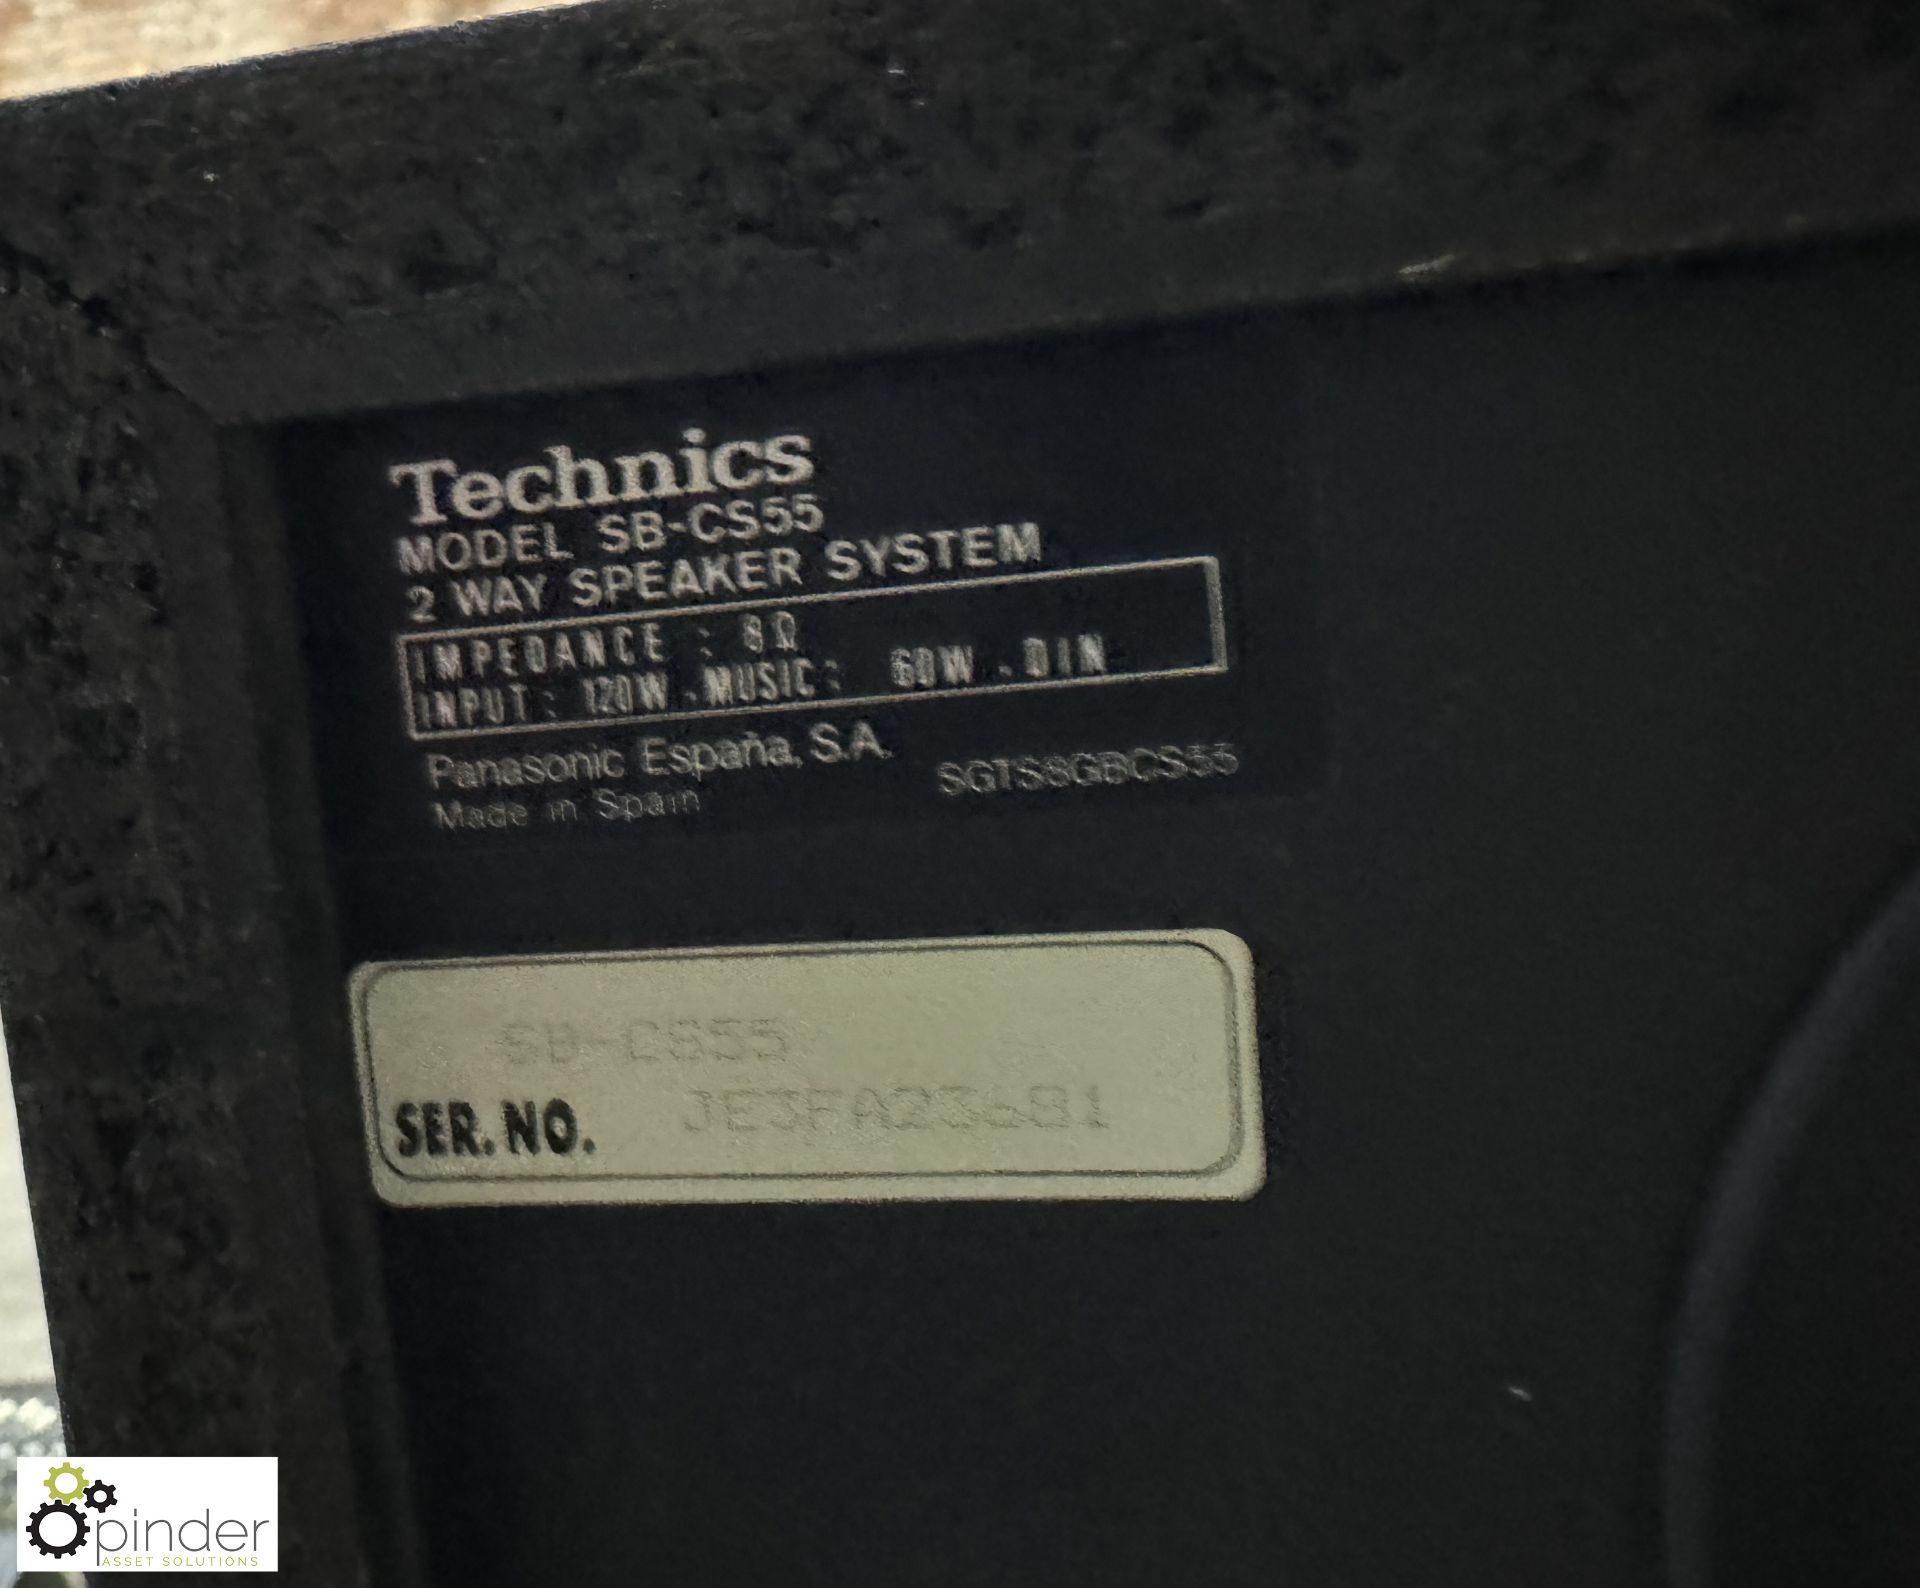 Pair Technics SB-CS 55 Speakers - Image 2 of 3